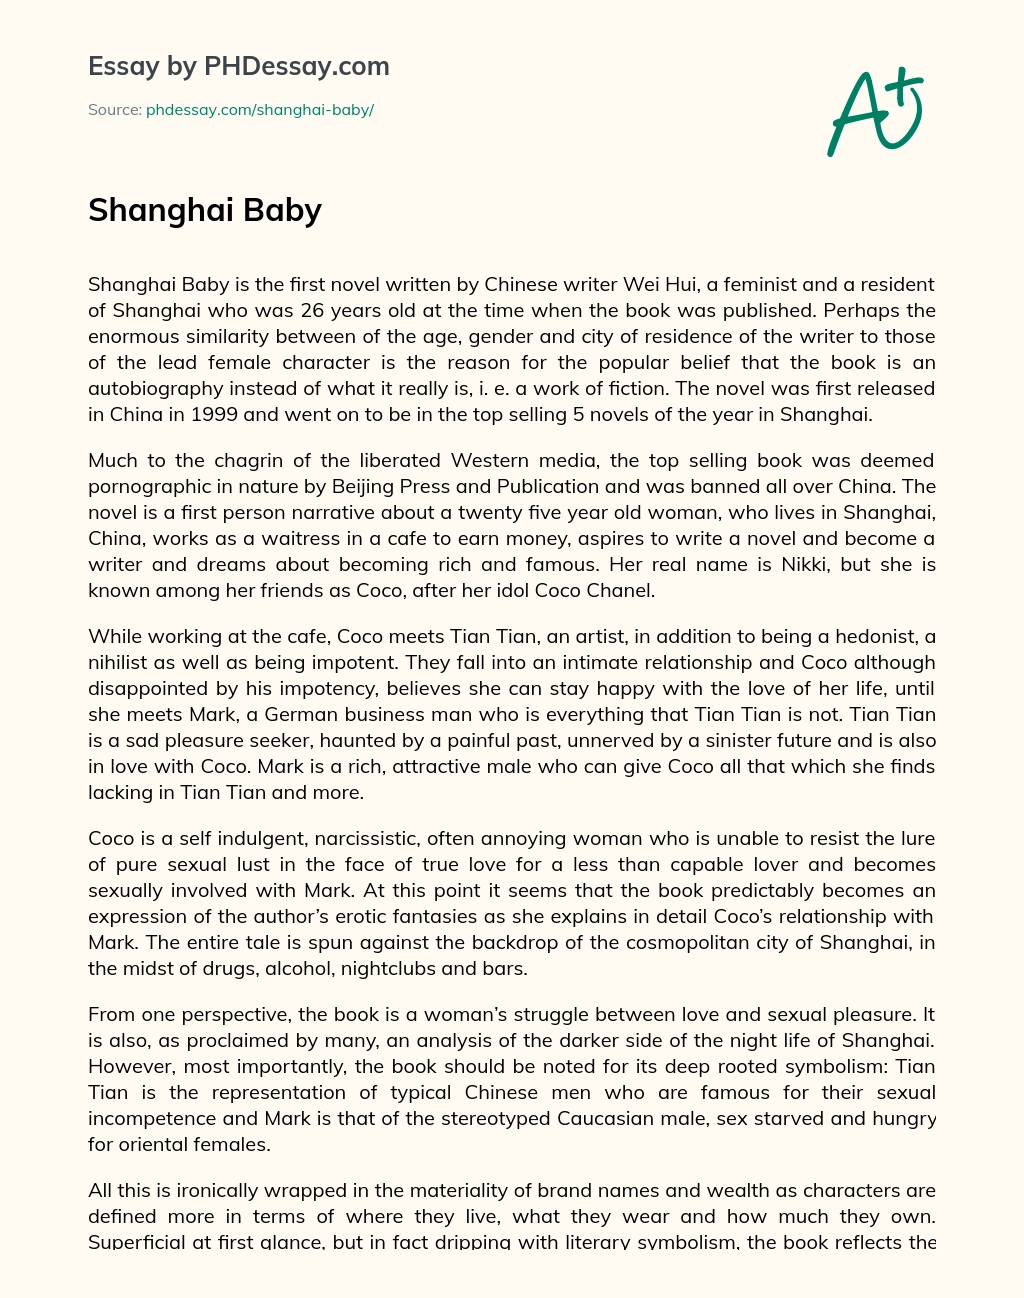 Shanghai Baby essay